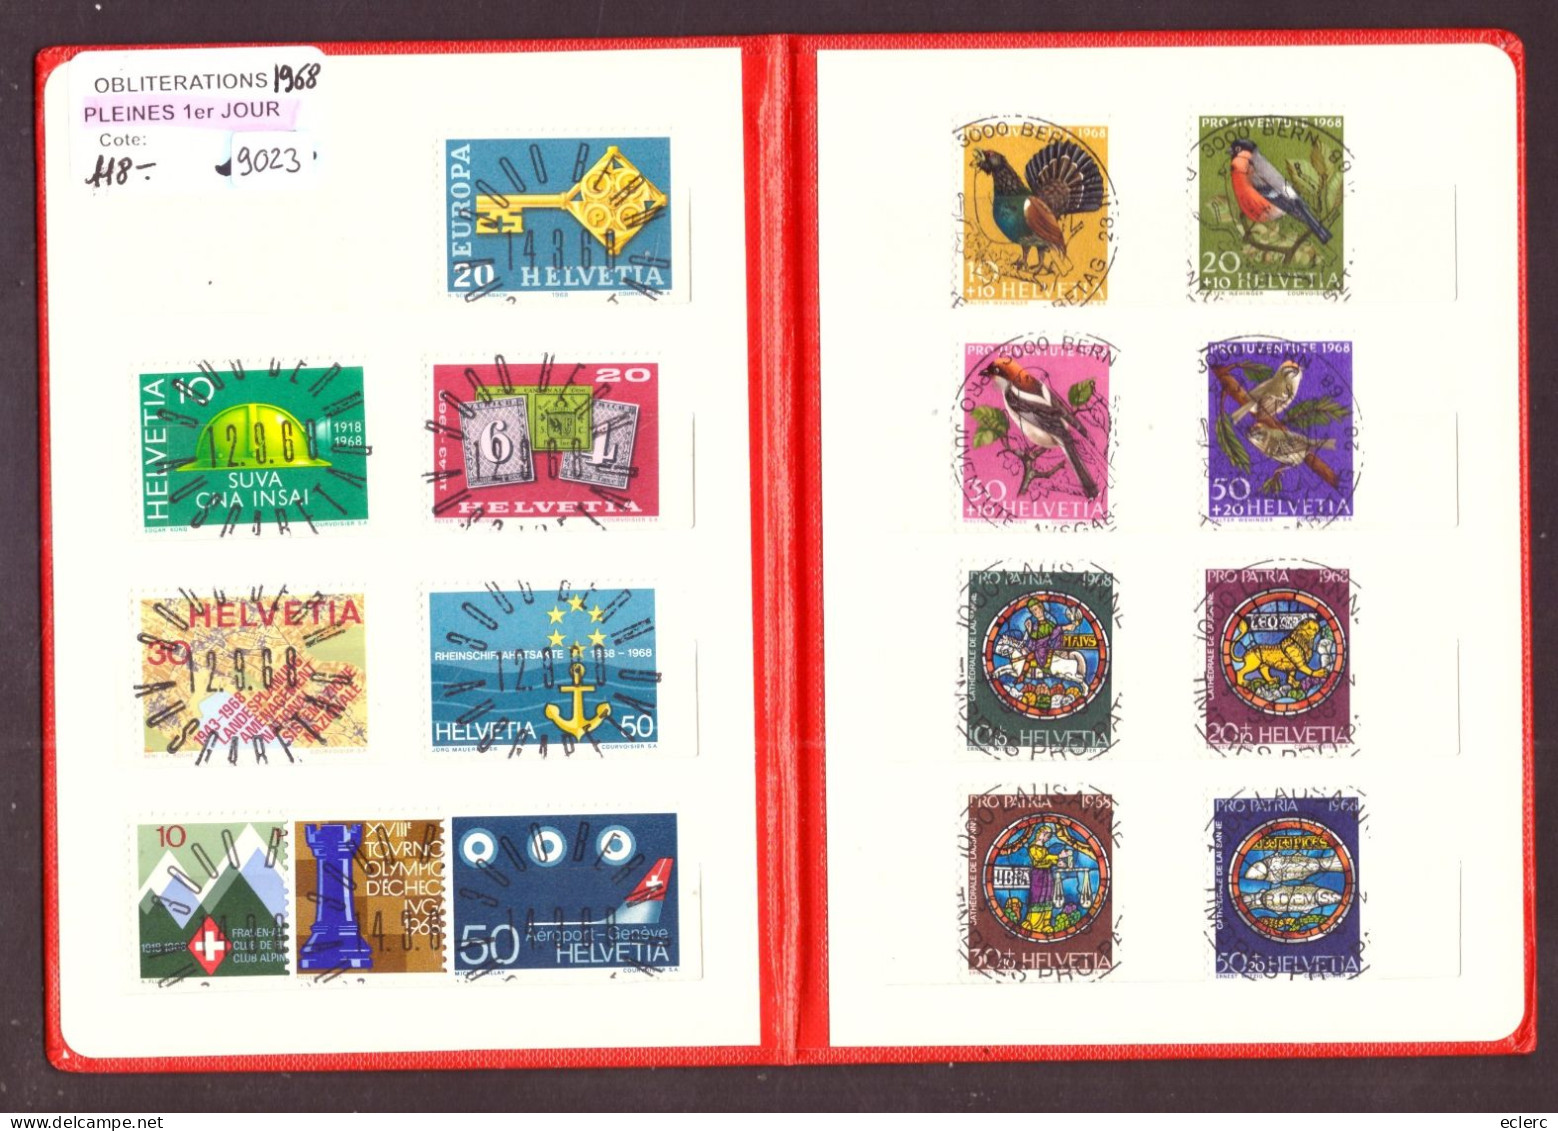 ANNEE COMPLETE 1968 - OBLITERATIONS PLEINES 1er JOUR - ERSTTAG VOLL STEMPELN - COTE: 118.- - Used Stamps